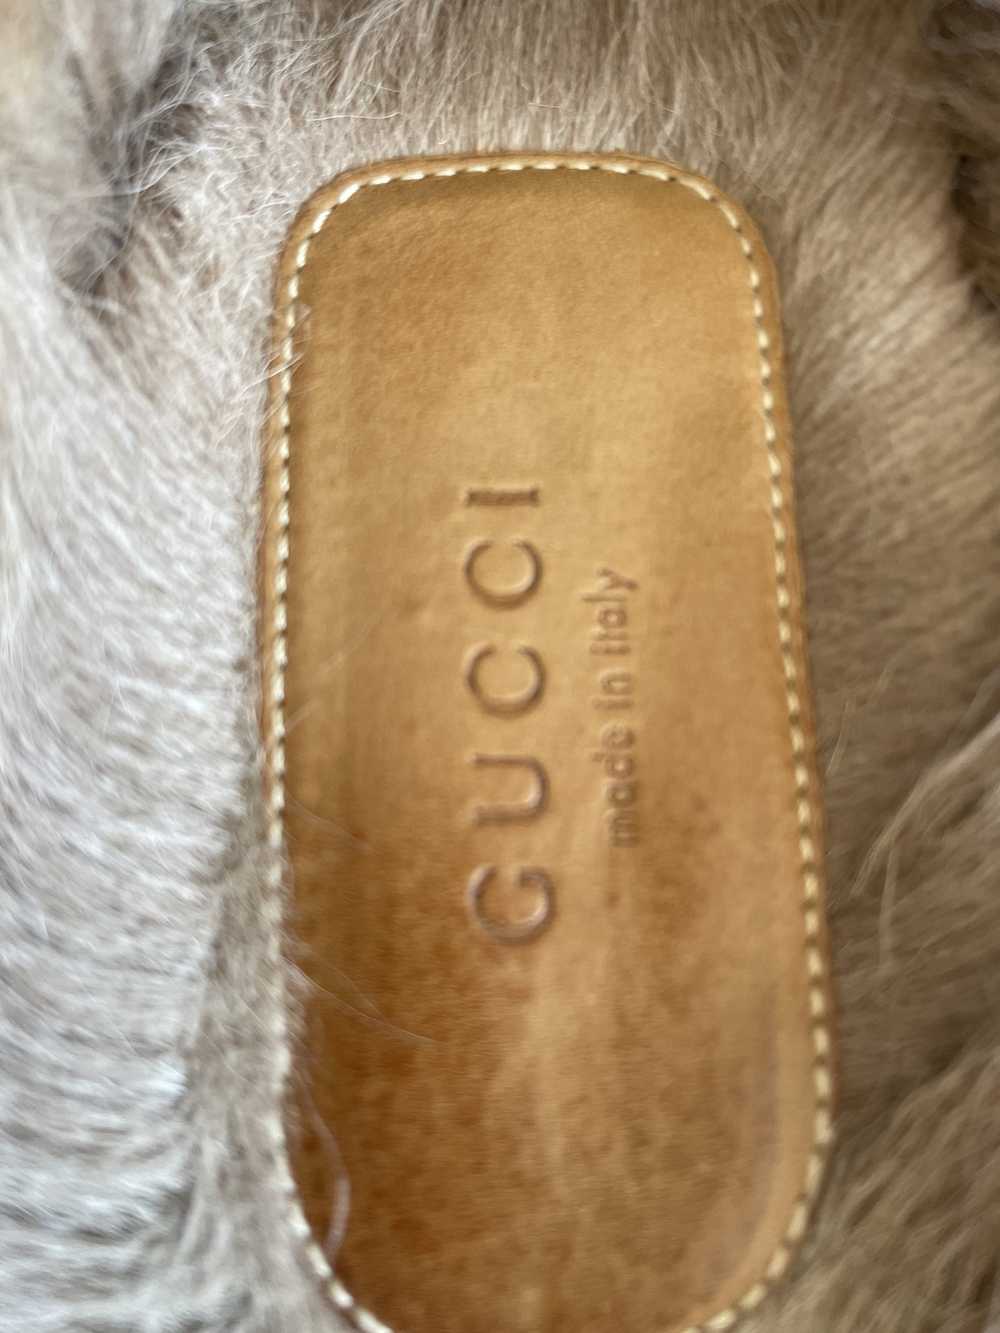 Gucci GUCCI 2015 Re-Edition women's Princetown - image 3